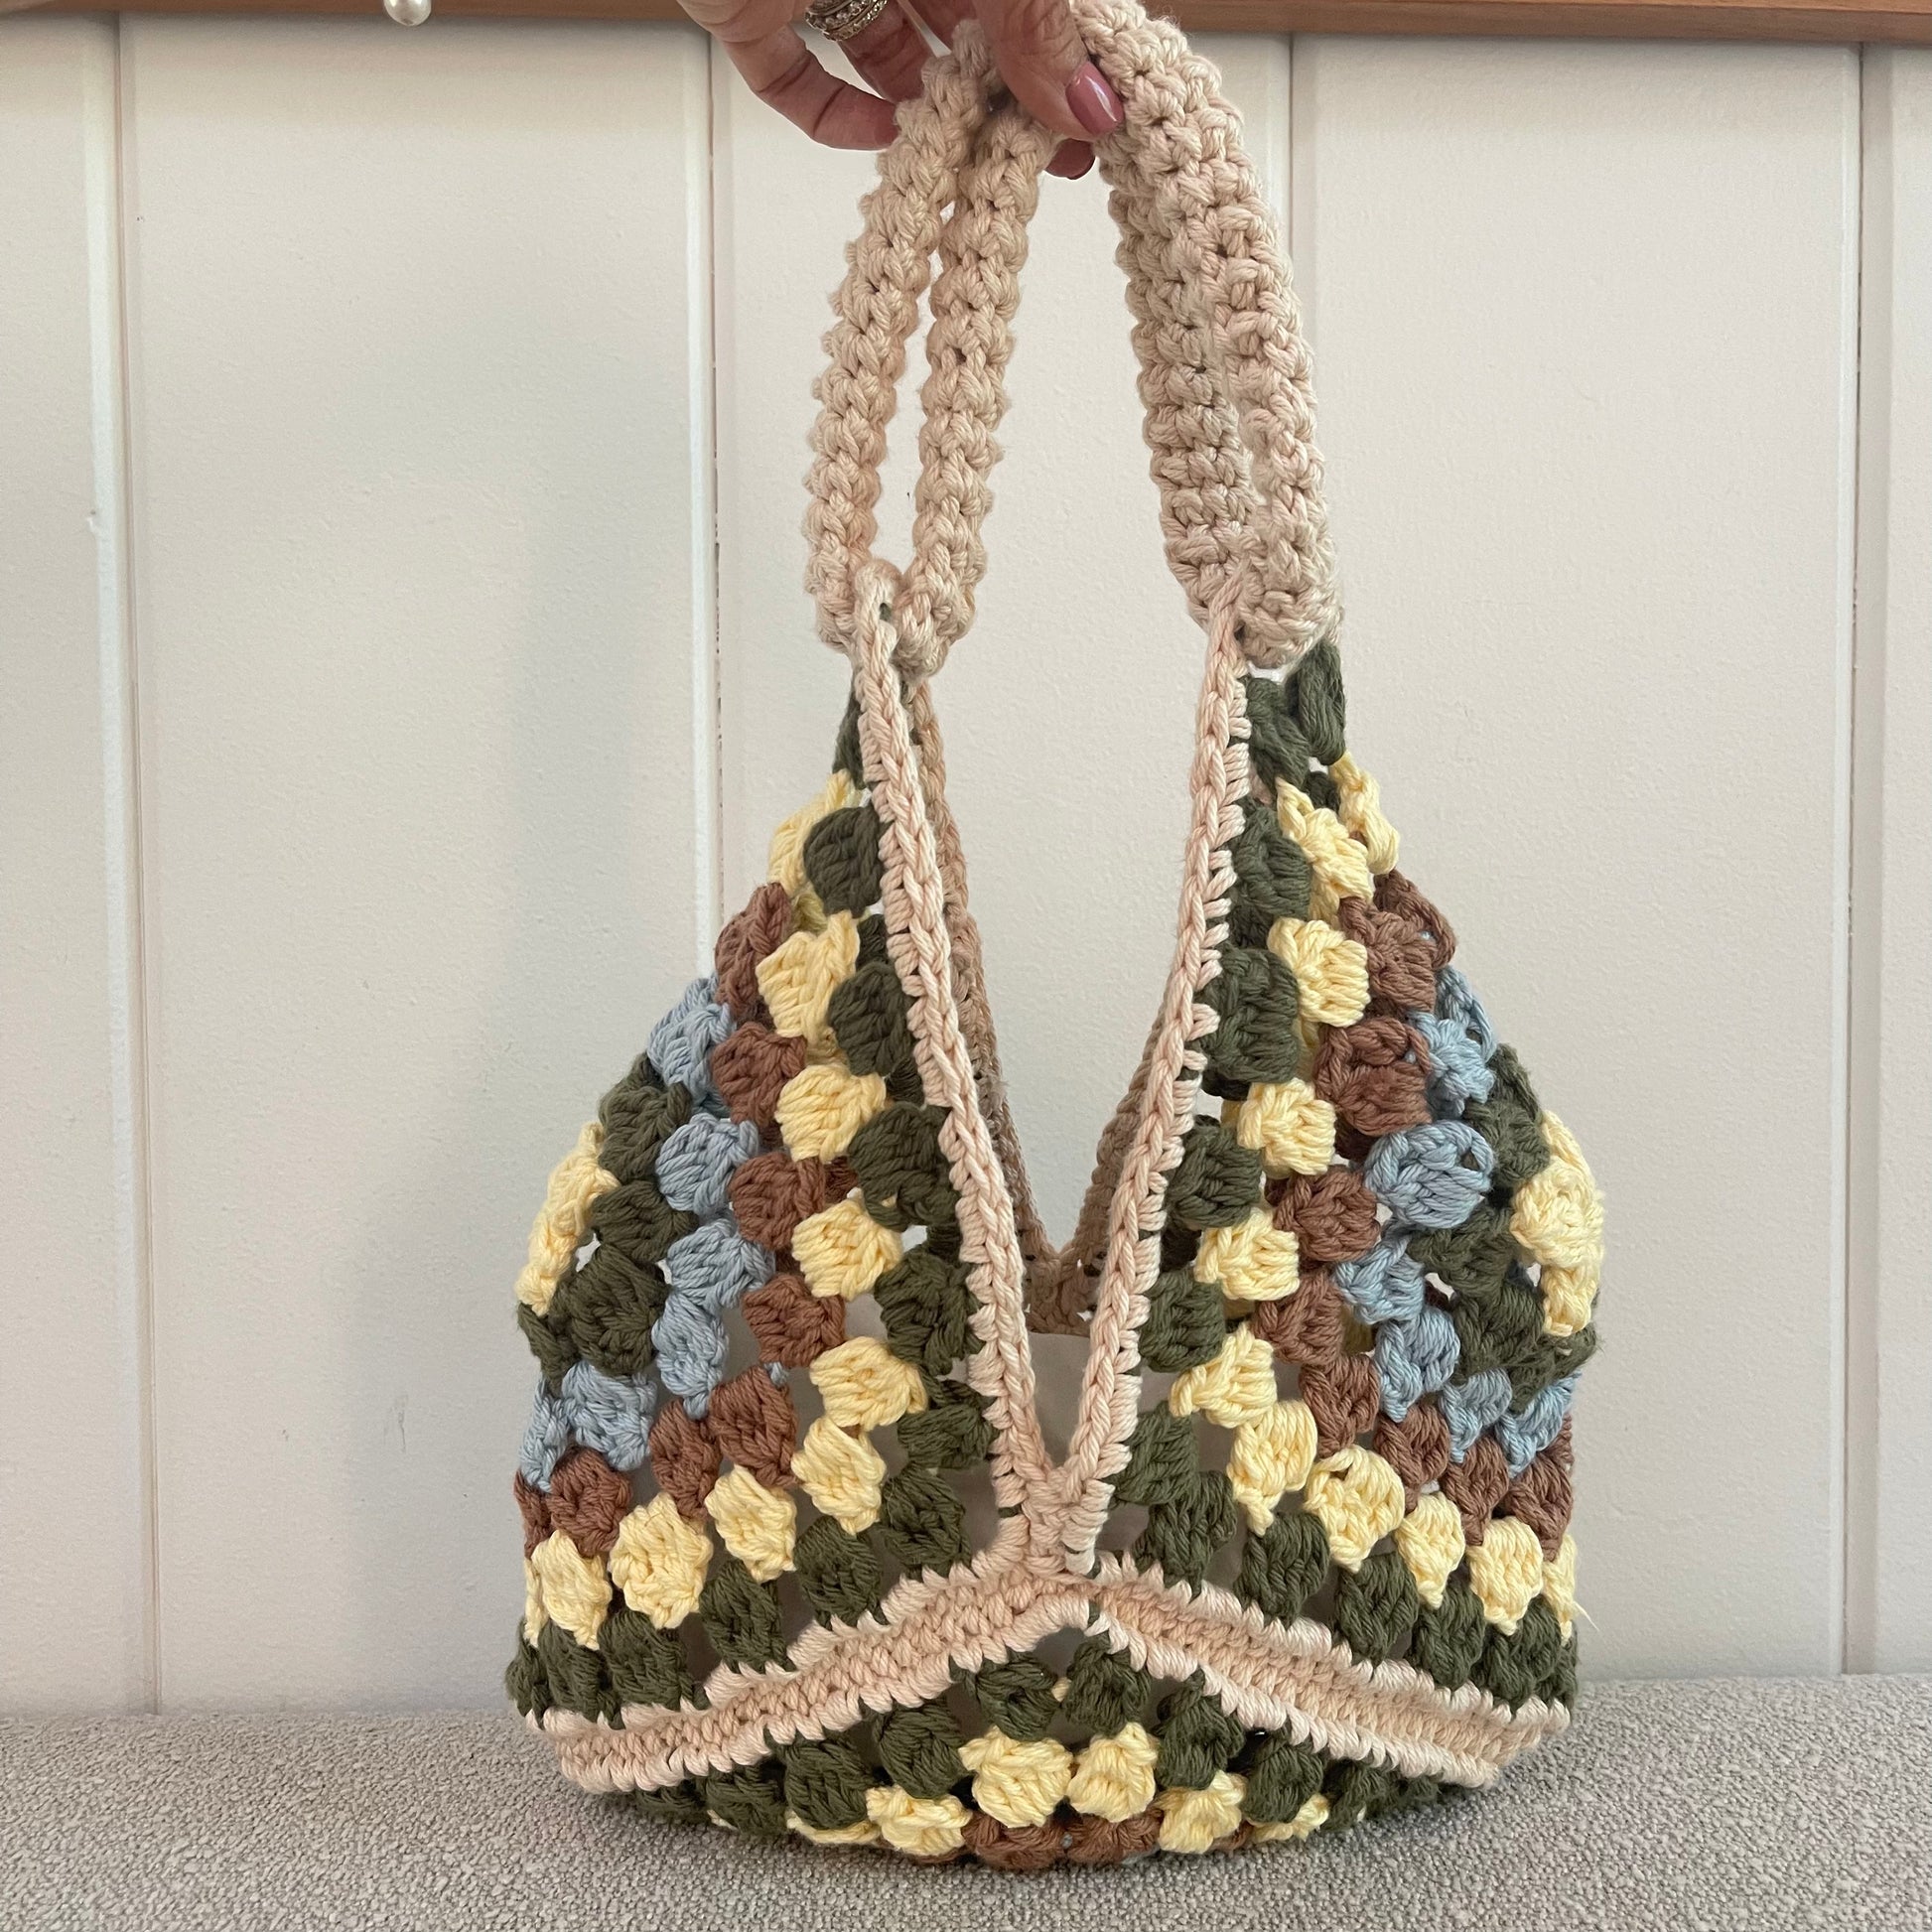 Crochet Granny Square handbag in light yellow, green, baby blue, brown and cream. 